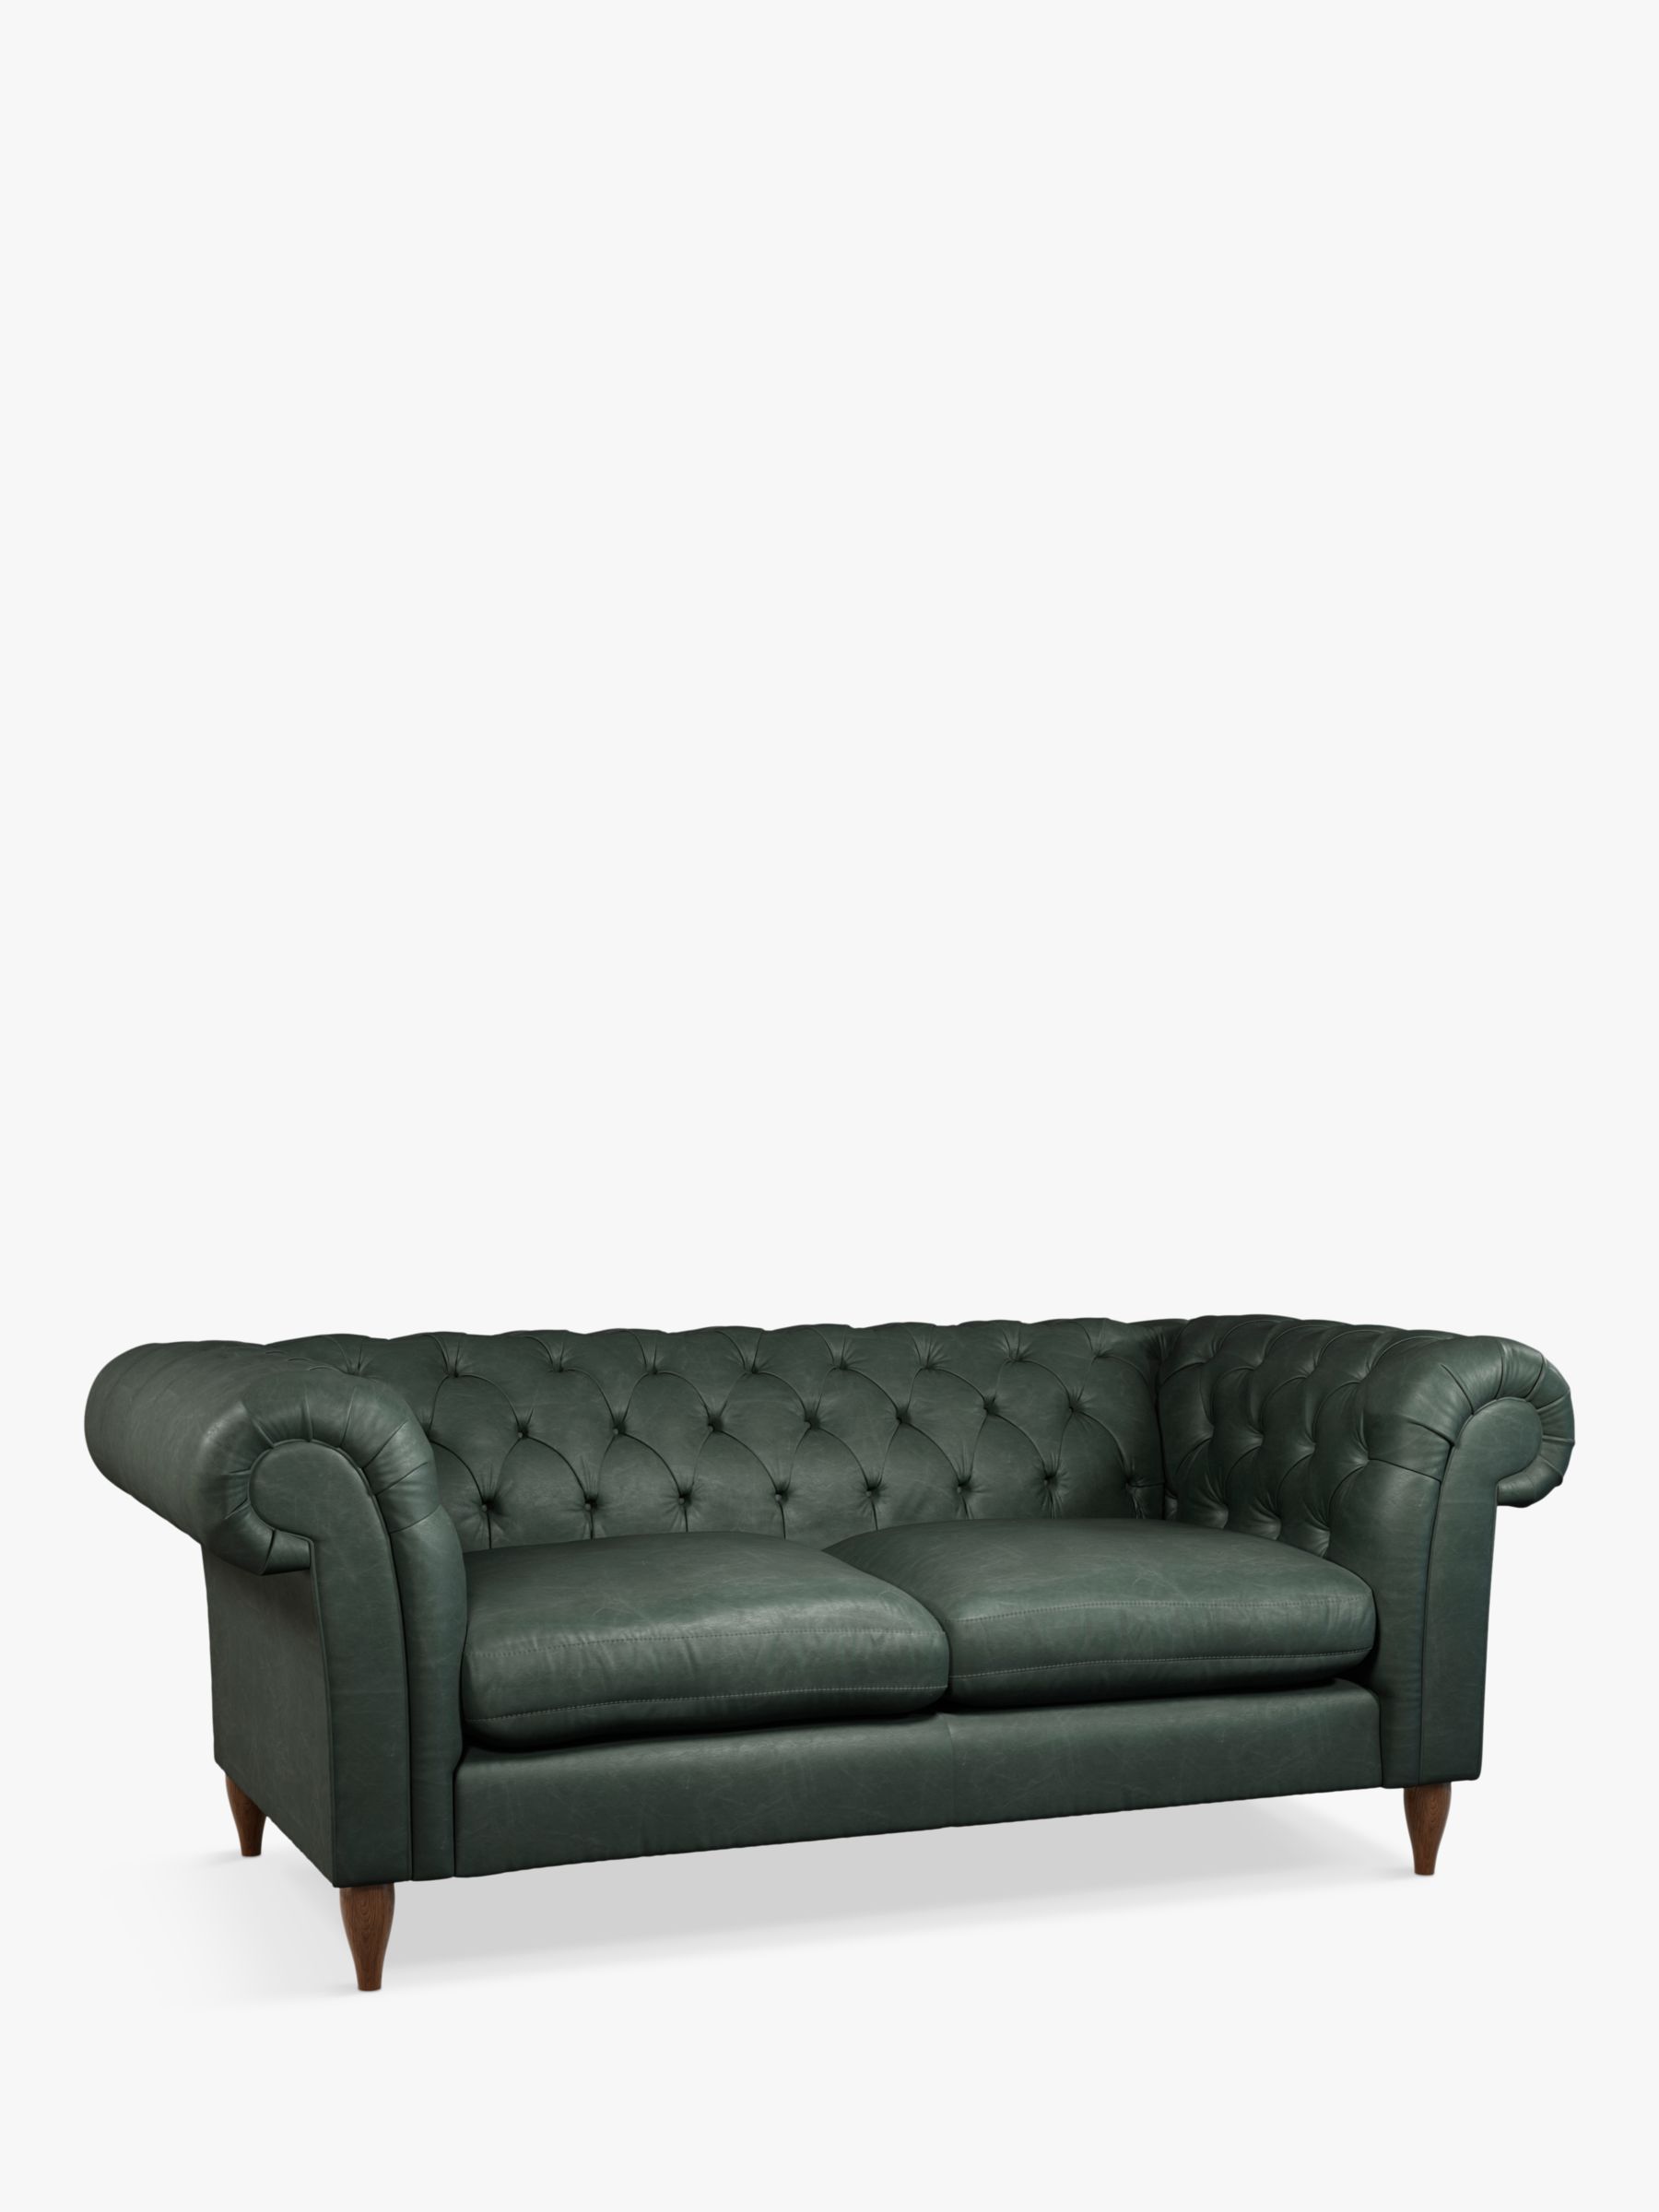 Cromwell Range, John Lewis Cromwell Chesterfield Large 3 Seater Leather Sofa, Dark Leg, Sellvagio Green